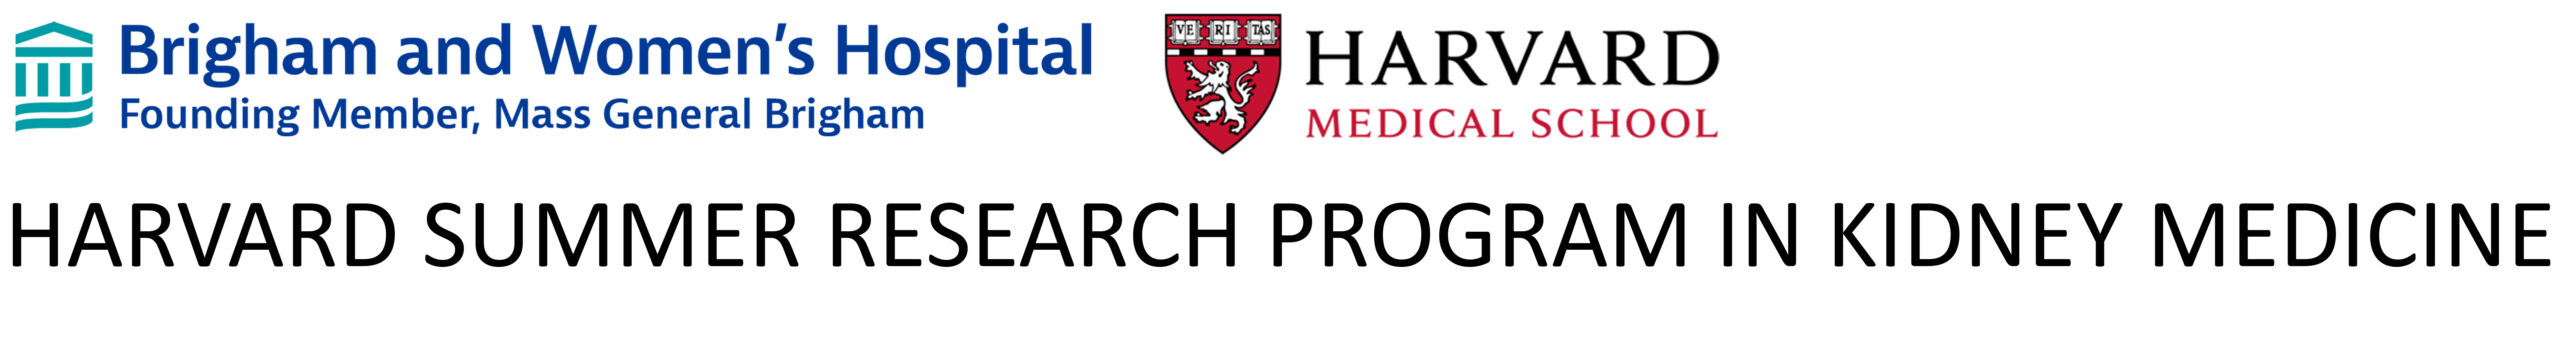 Harvard Summer Research Program in Kidney Medicine